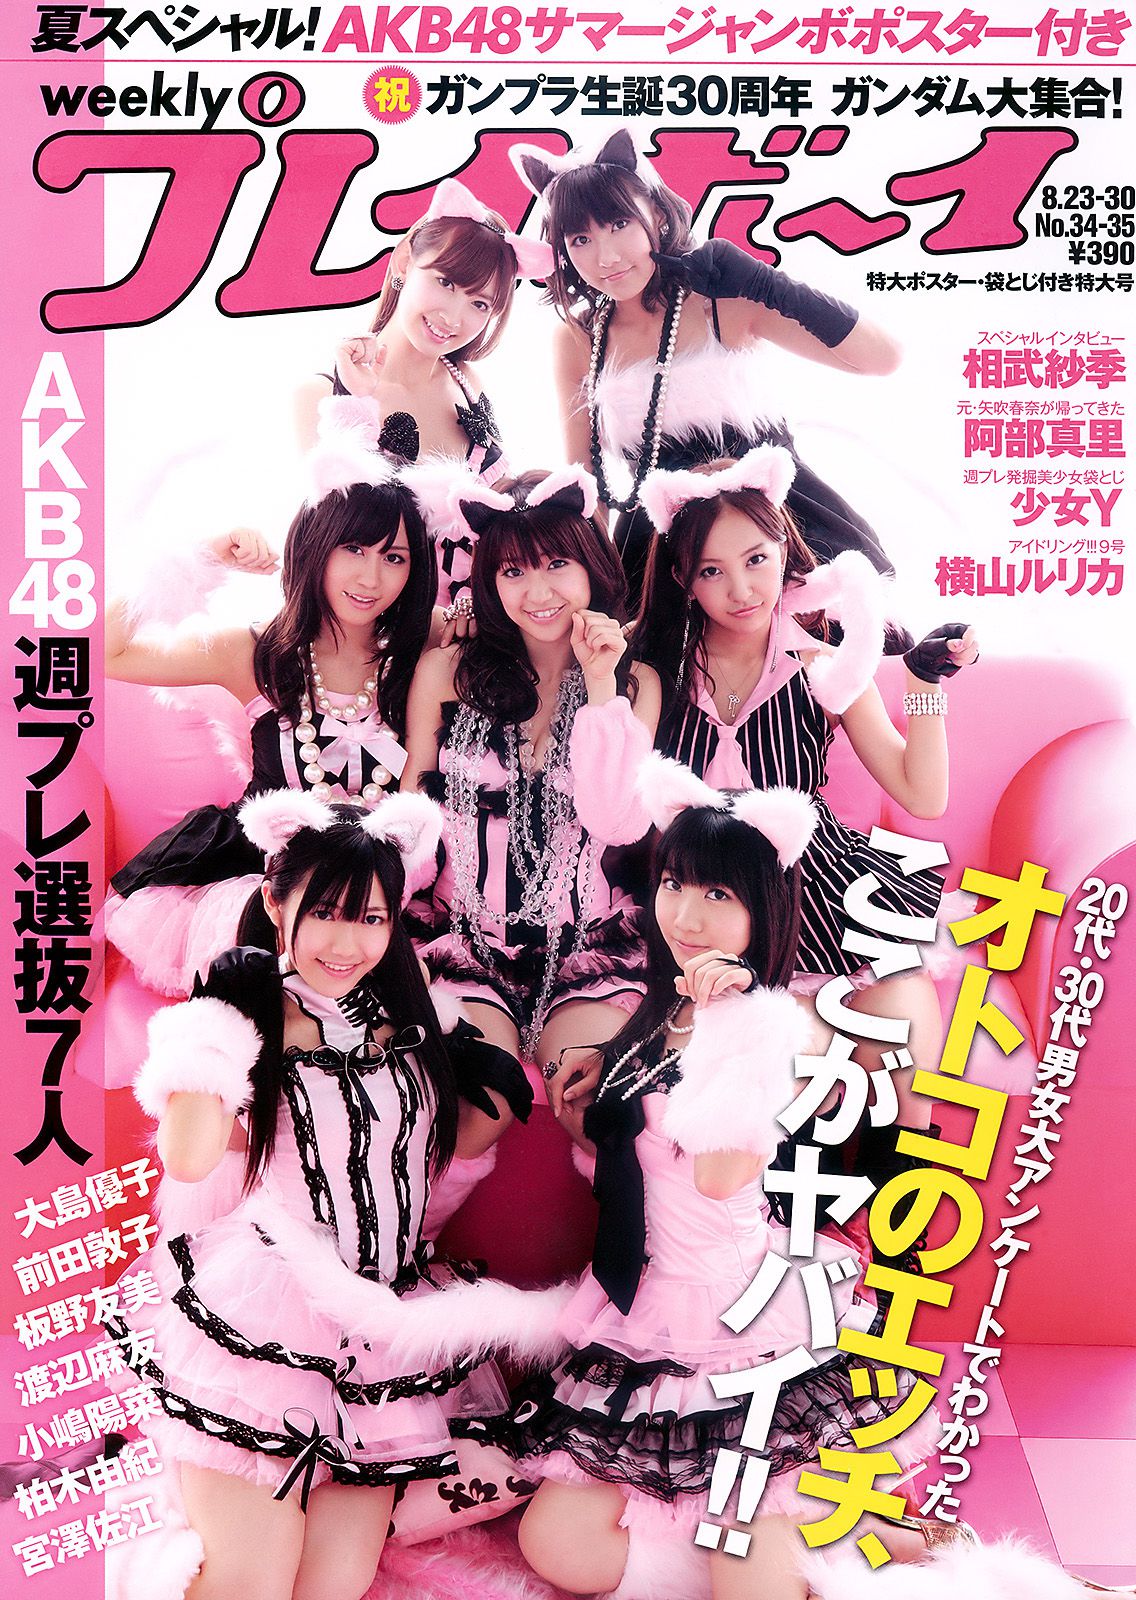 [Weekly Playboy] 2010年No.34-35 写真杂志